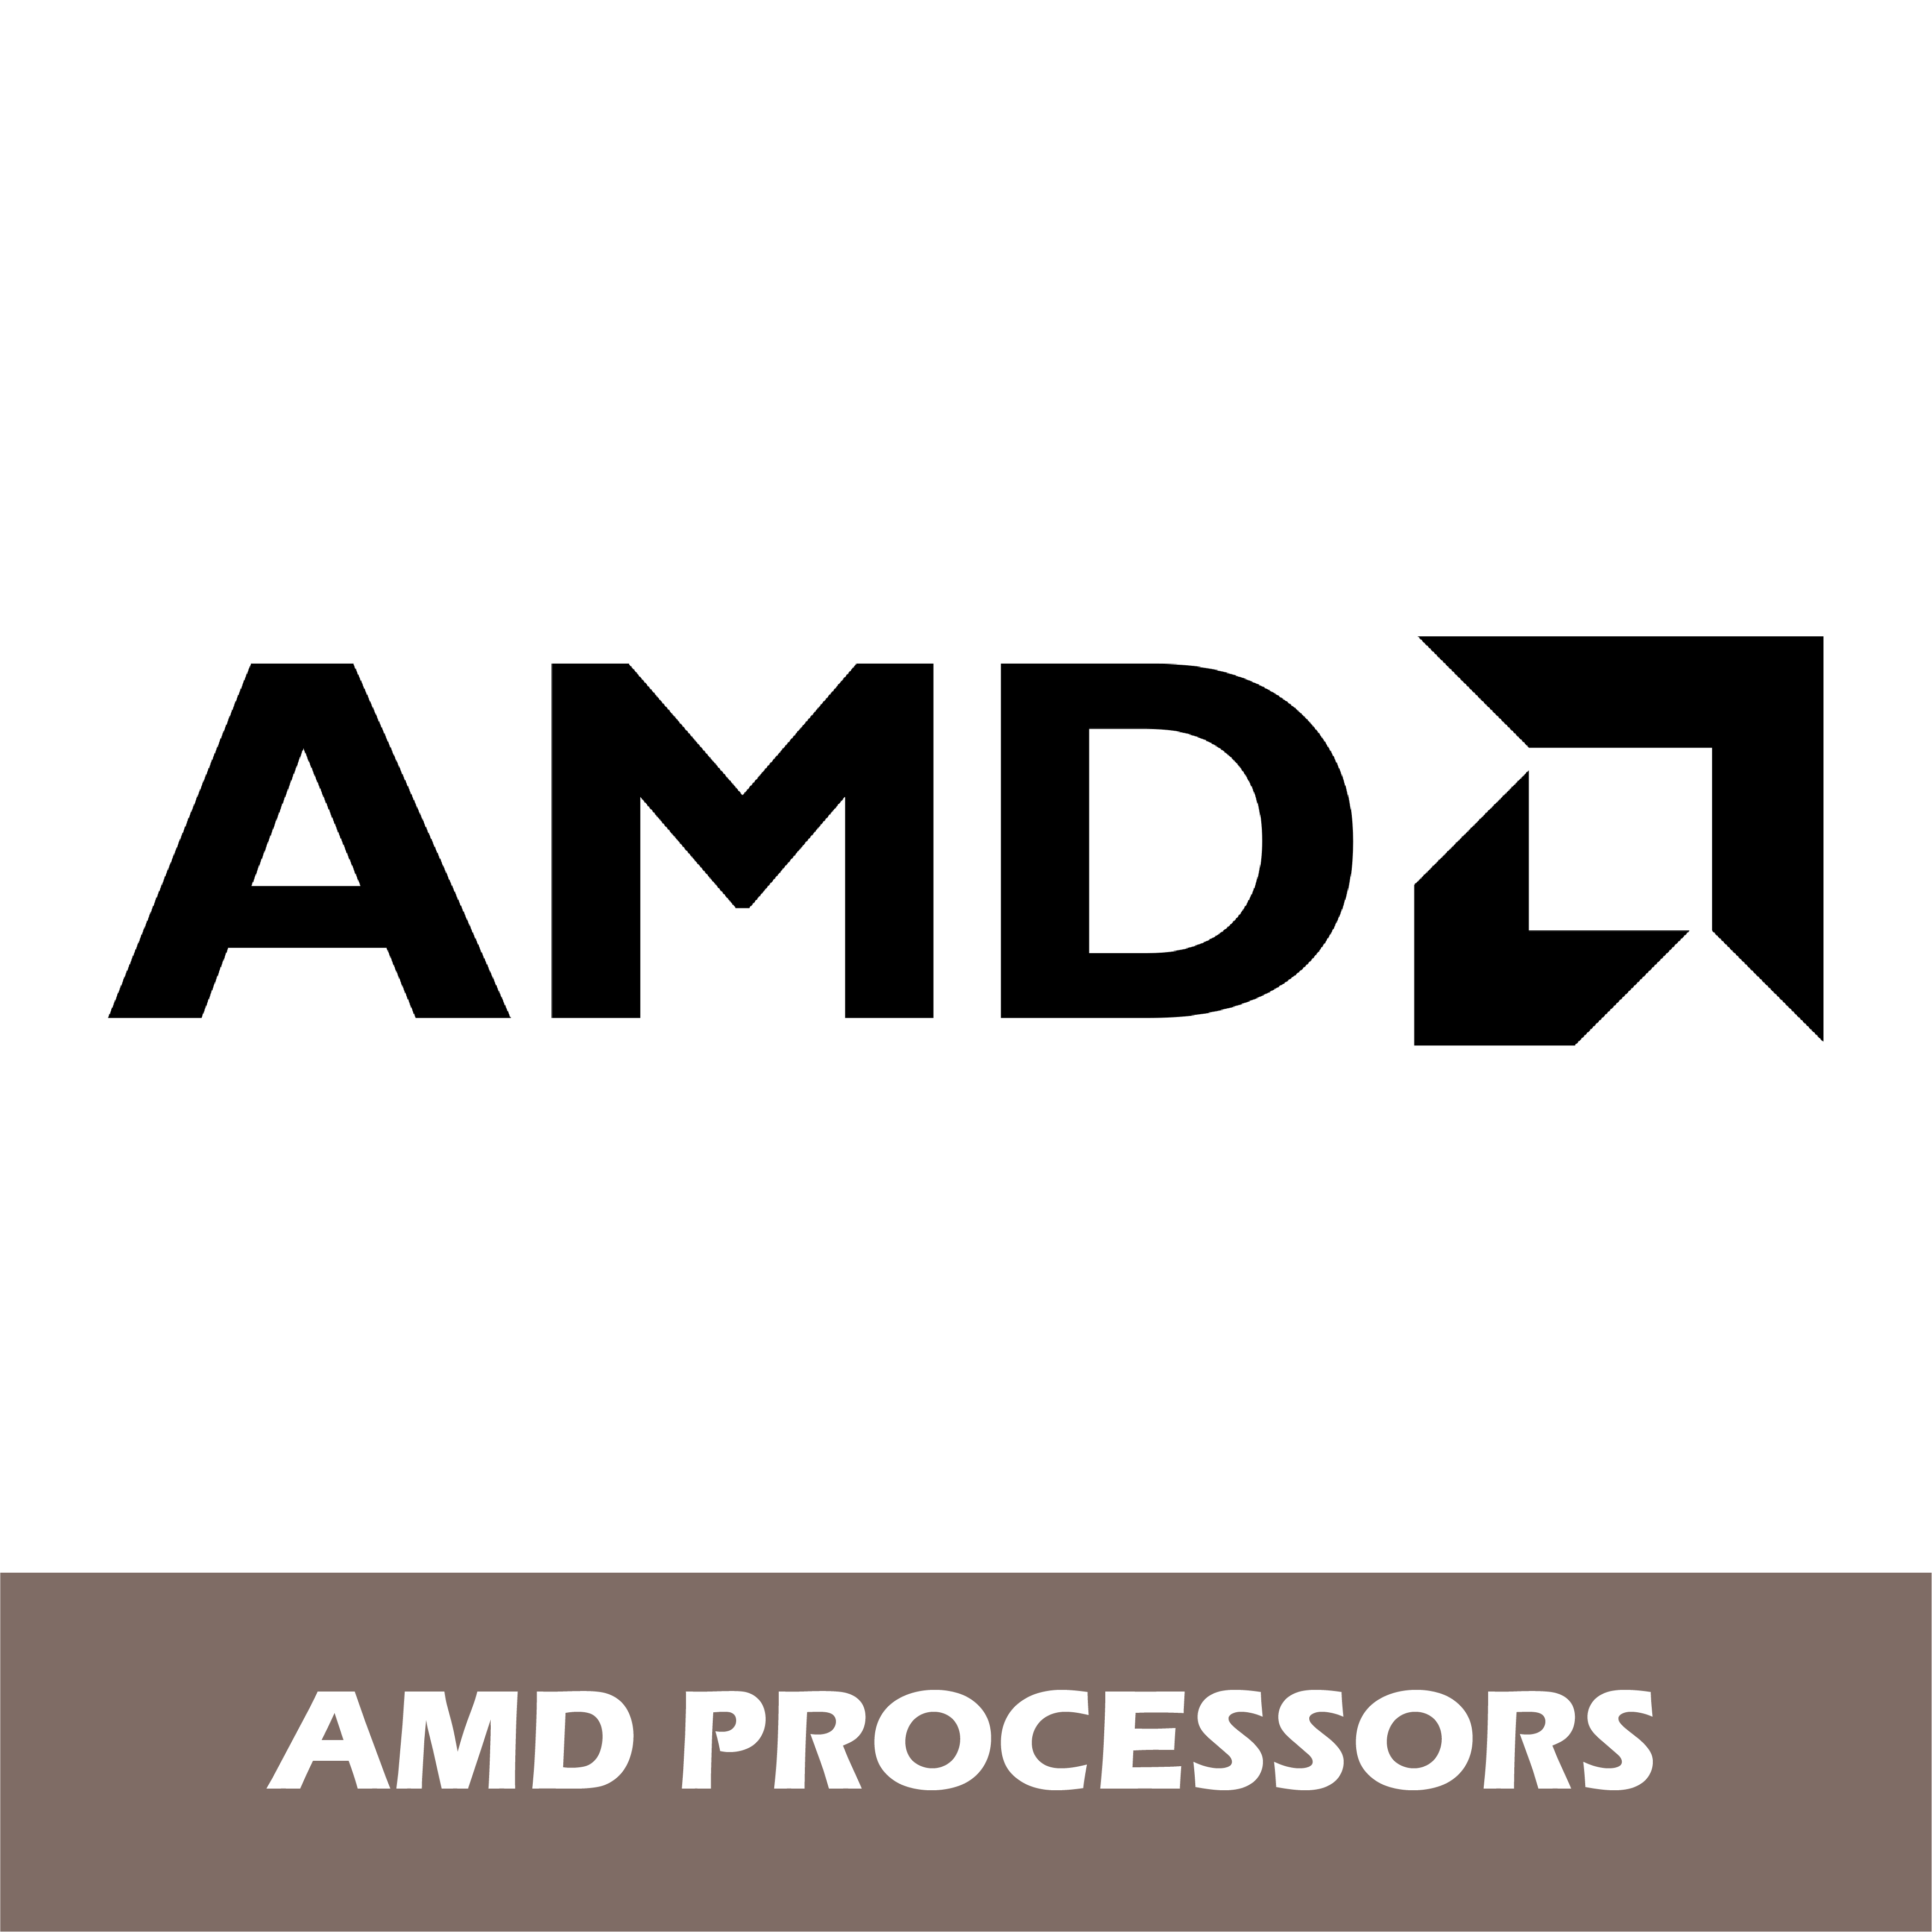 AMD PROCESSORS